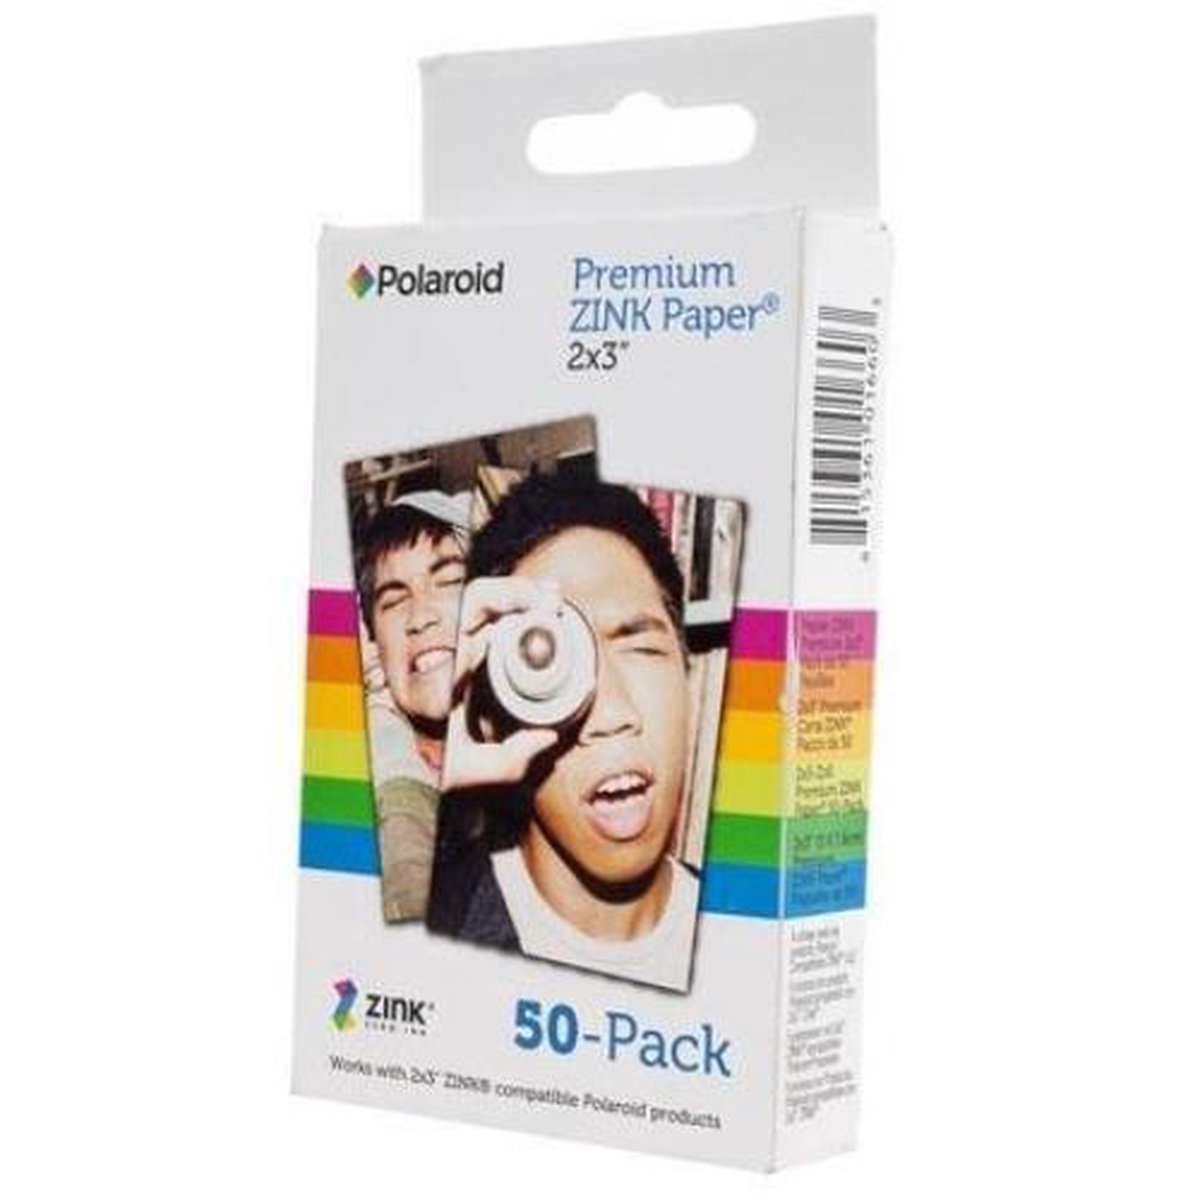 Polaroid 2x3" Premium Zink Paper - 50 stuks | bol.com